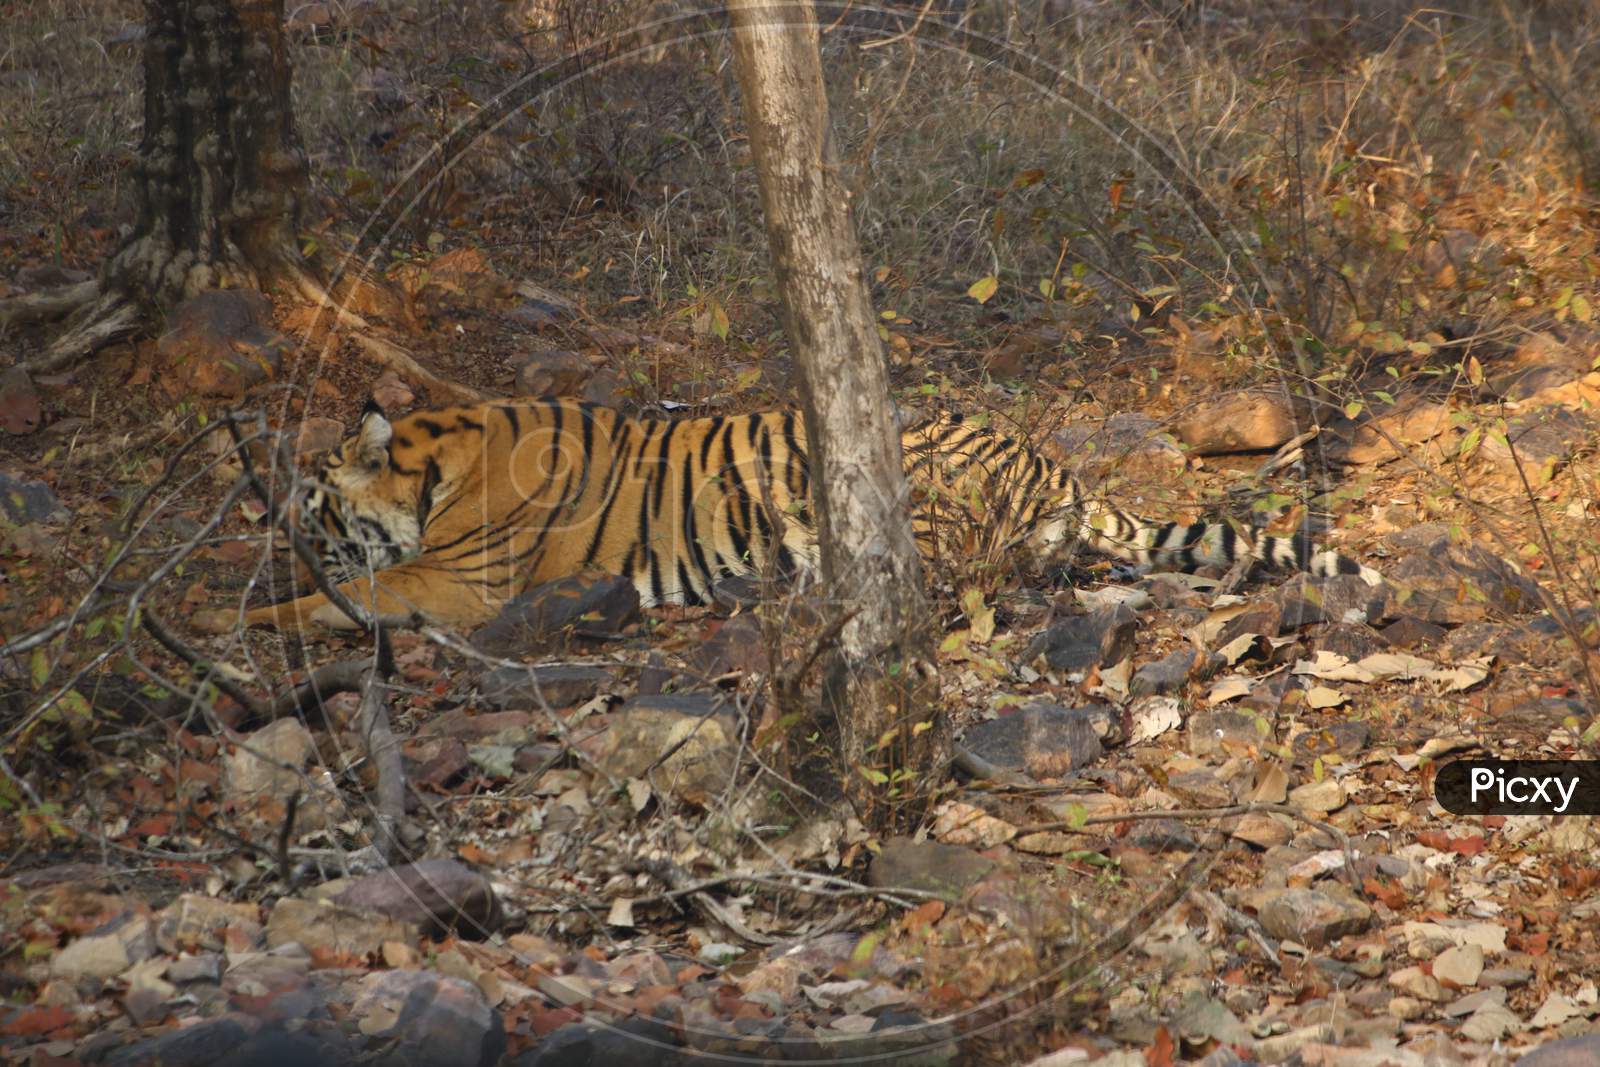 Tigress At The Ranthambore National Park In Rajasthan, India On 9 Feb 2020.